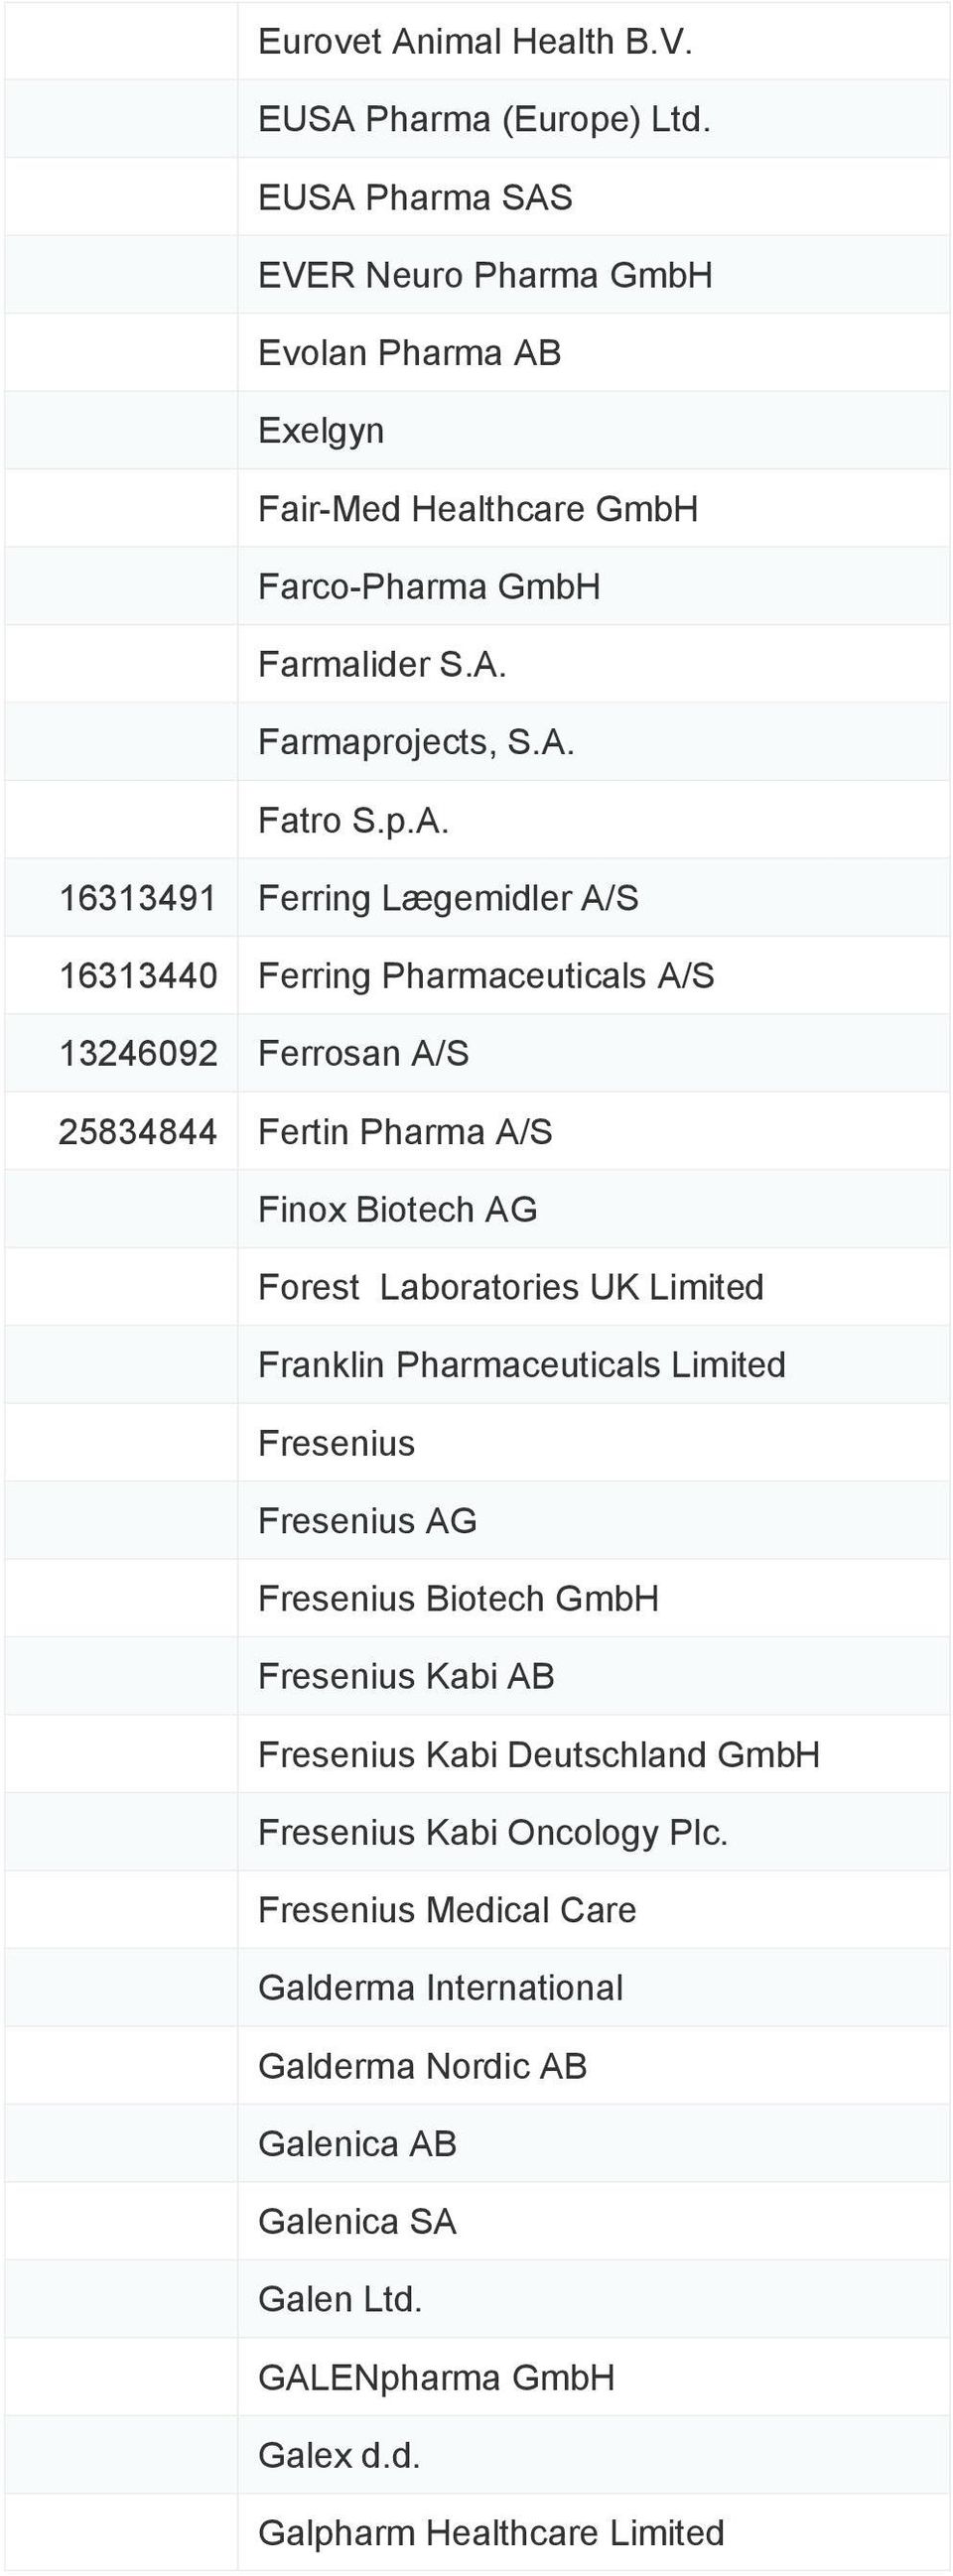 Ferring Lægemidler A/S 16313440 Ferring Pharmaceuticals A/S 13246092 Ferrosan A/S 25834844 Fertin Pharma A/S Finox Biotech AG Forest Laboratories UK Limited Franklin